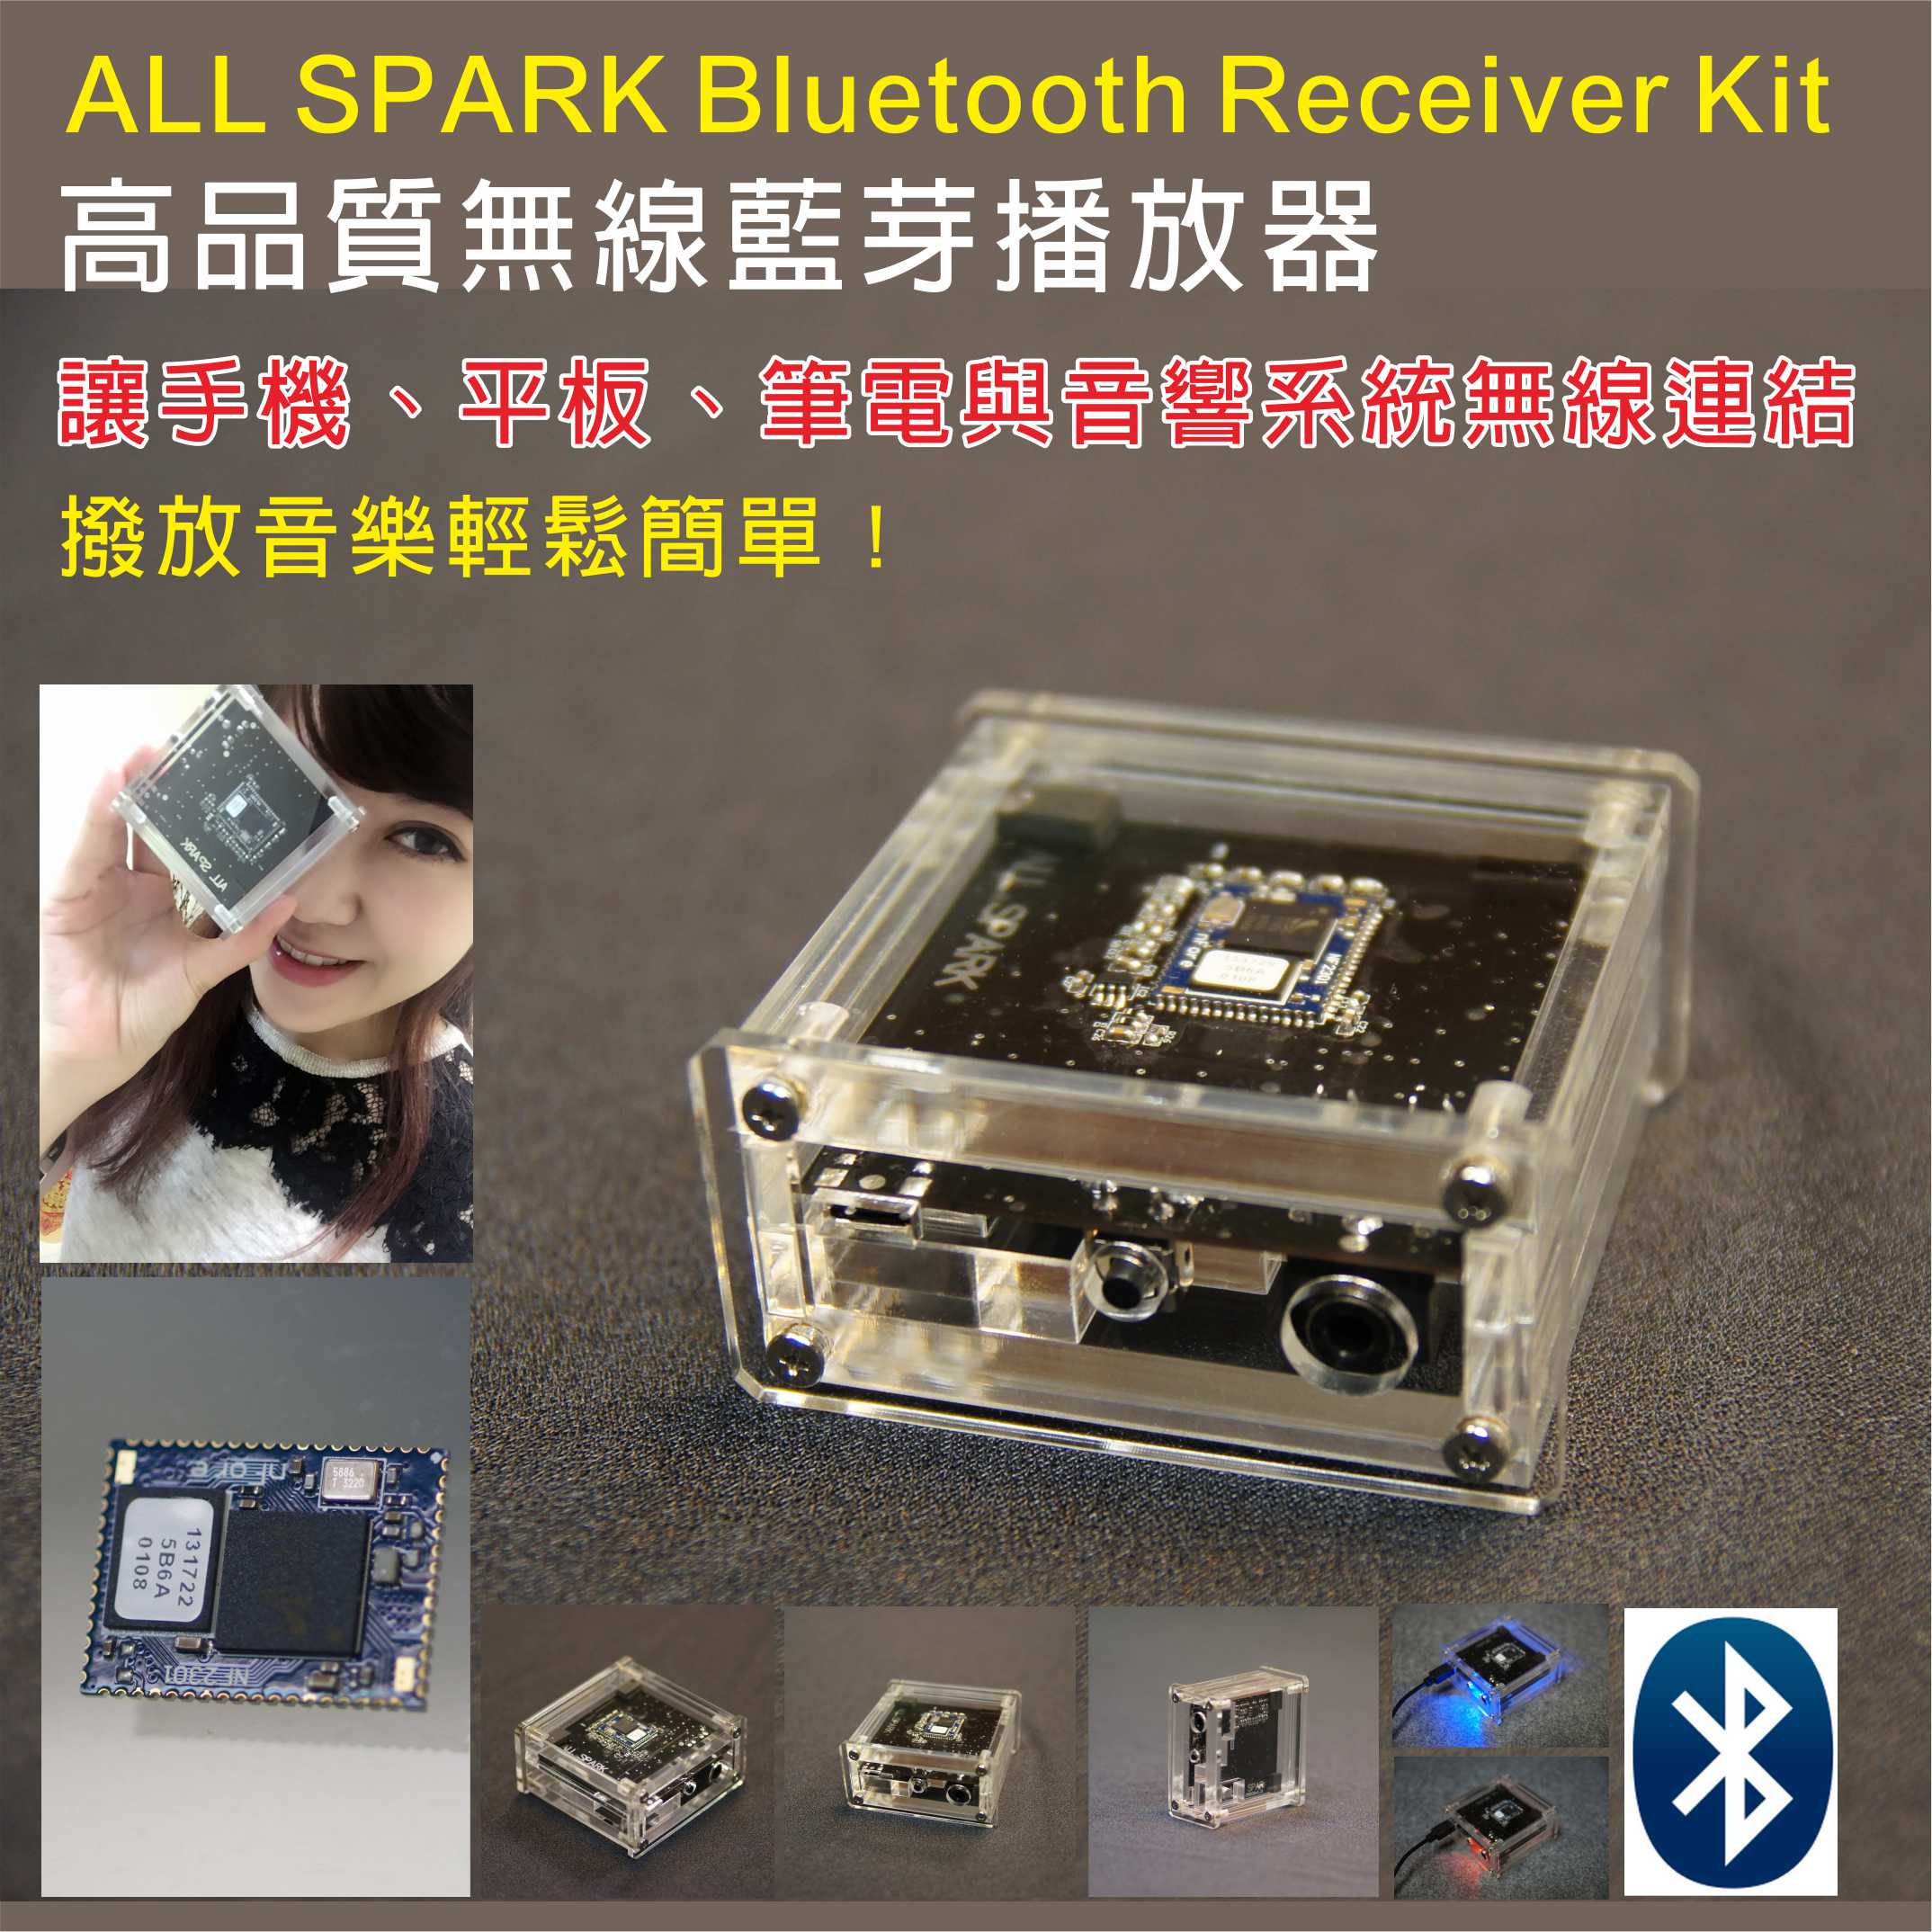 ALL SPARK 藍芽接收器套件【現貨供應中】